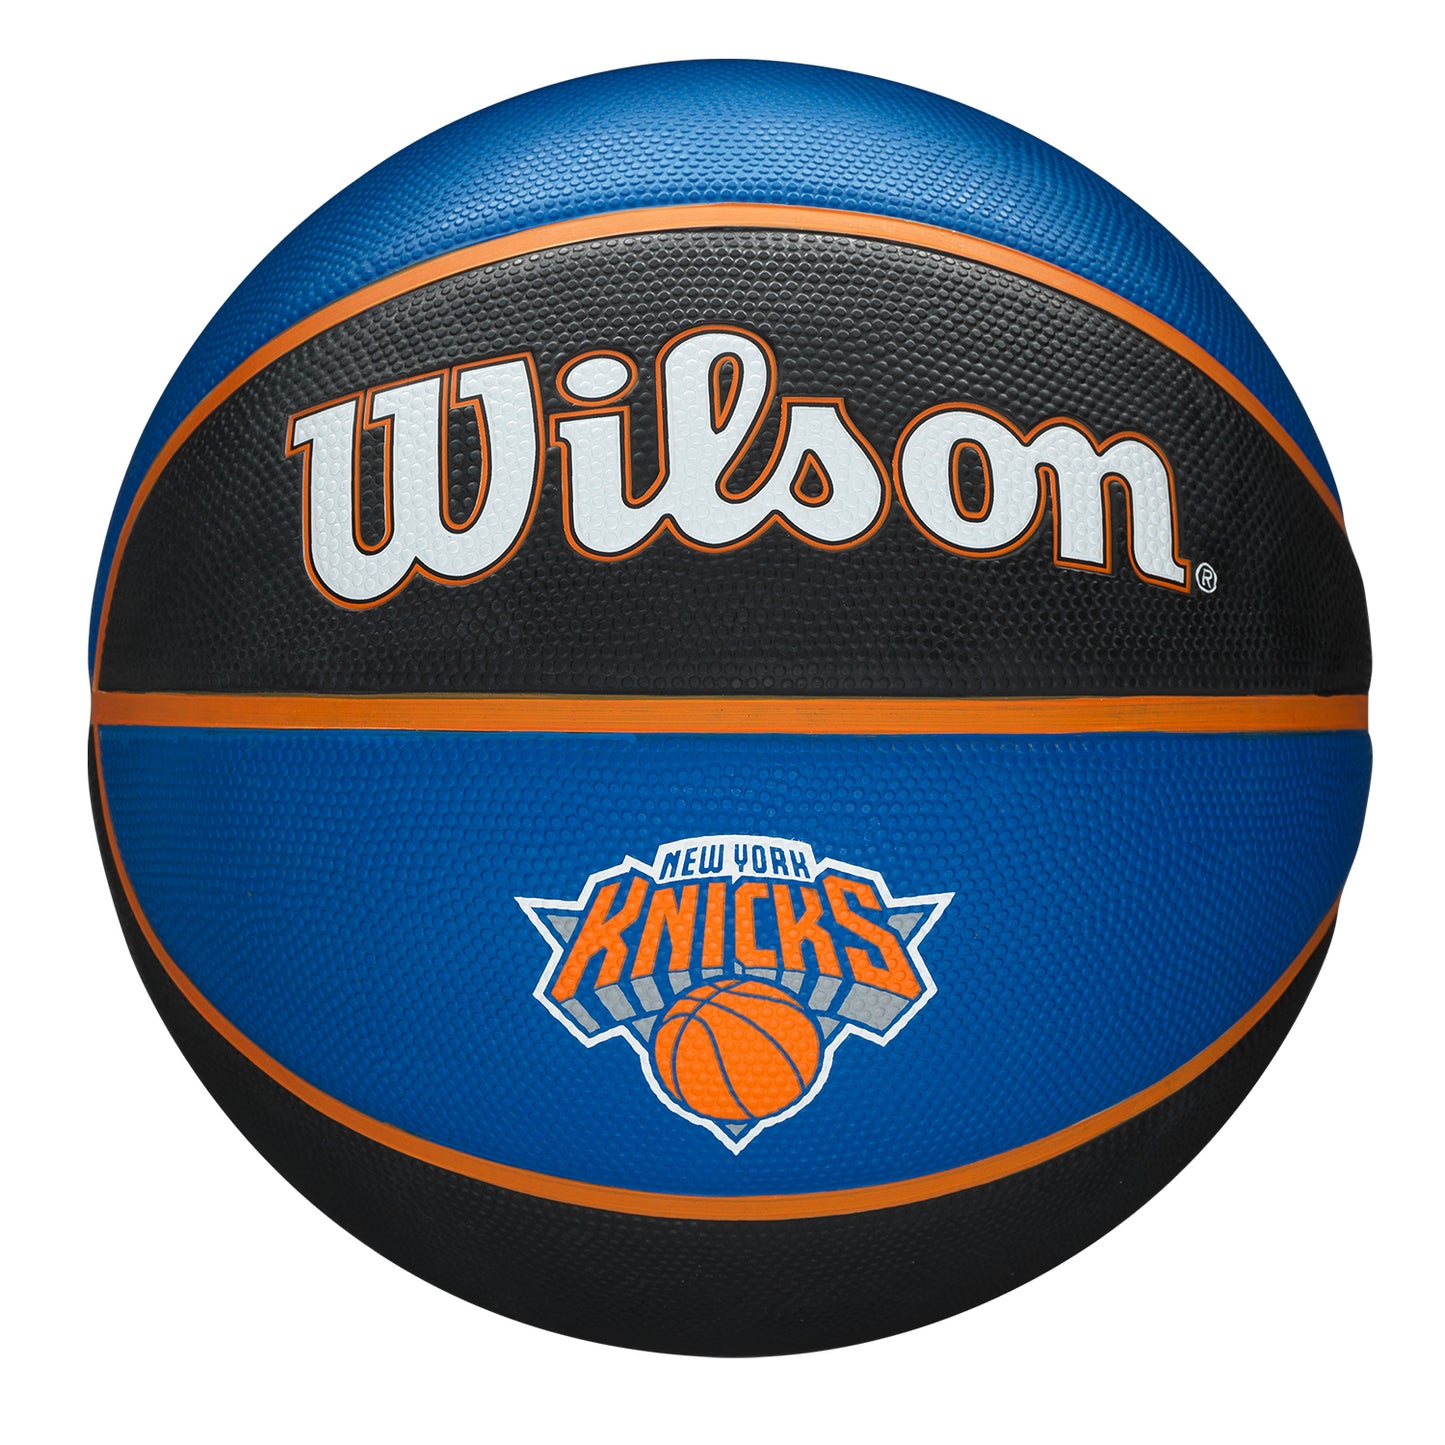 Wilson Knicks Tribute Basketball In Blue, Black & Orange - Front View